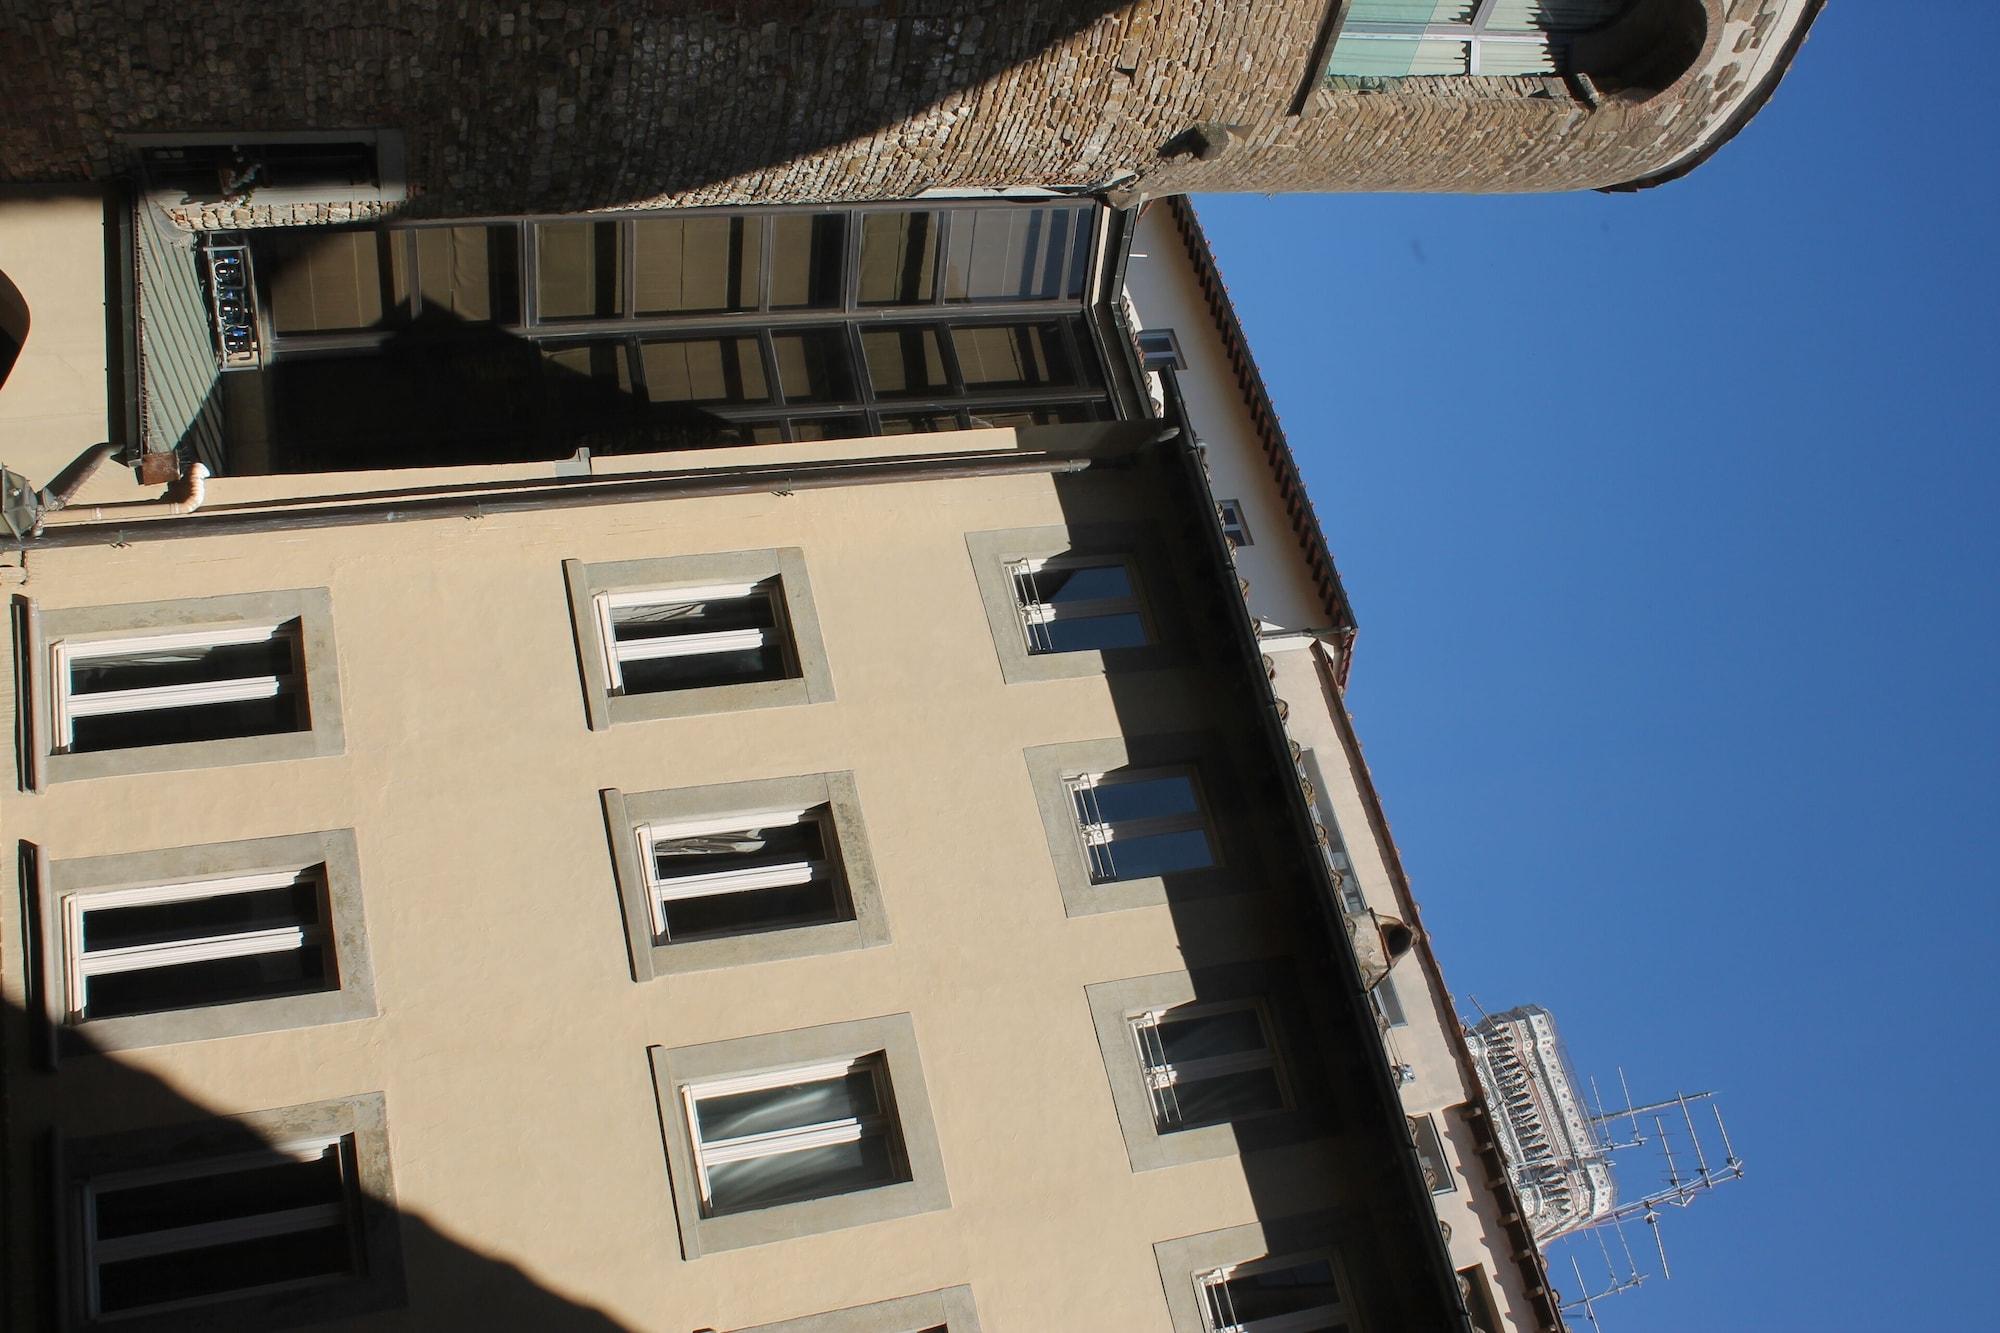 Donati Luxury Tower Suites Florence Exterior photo